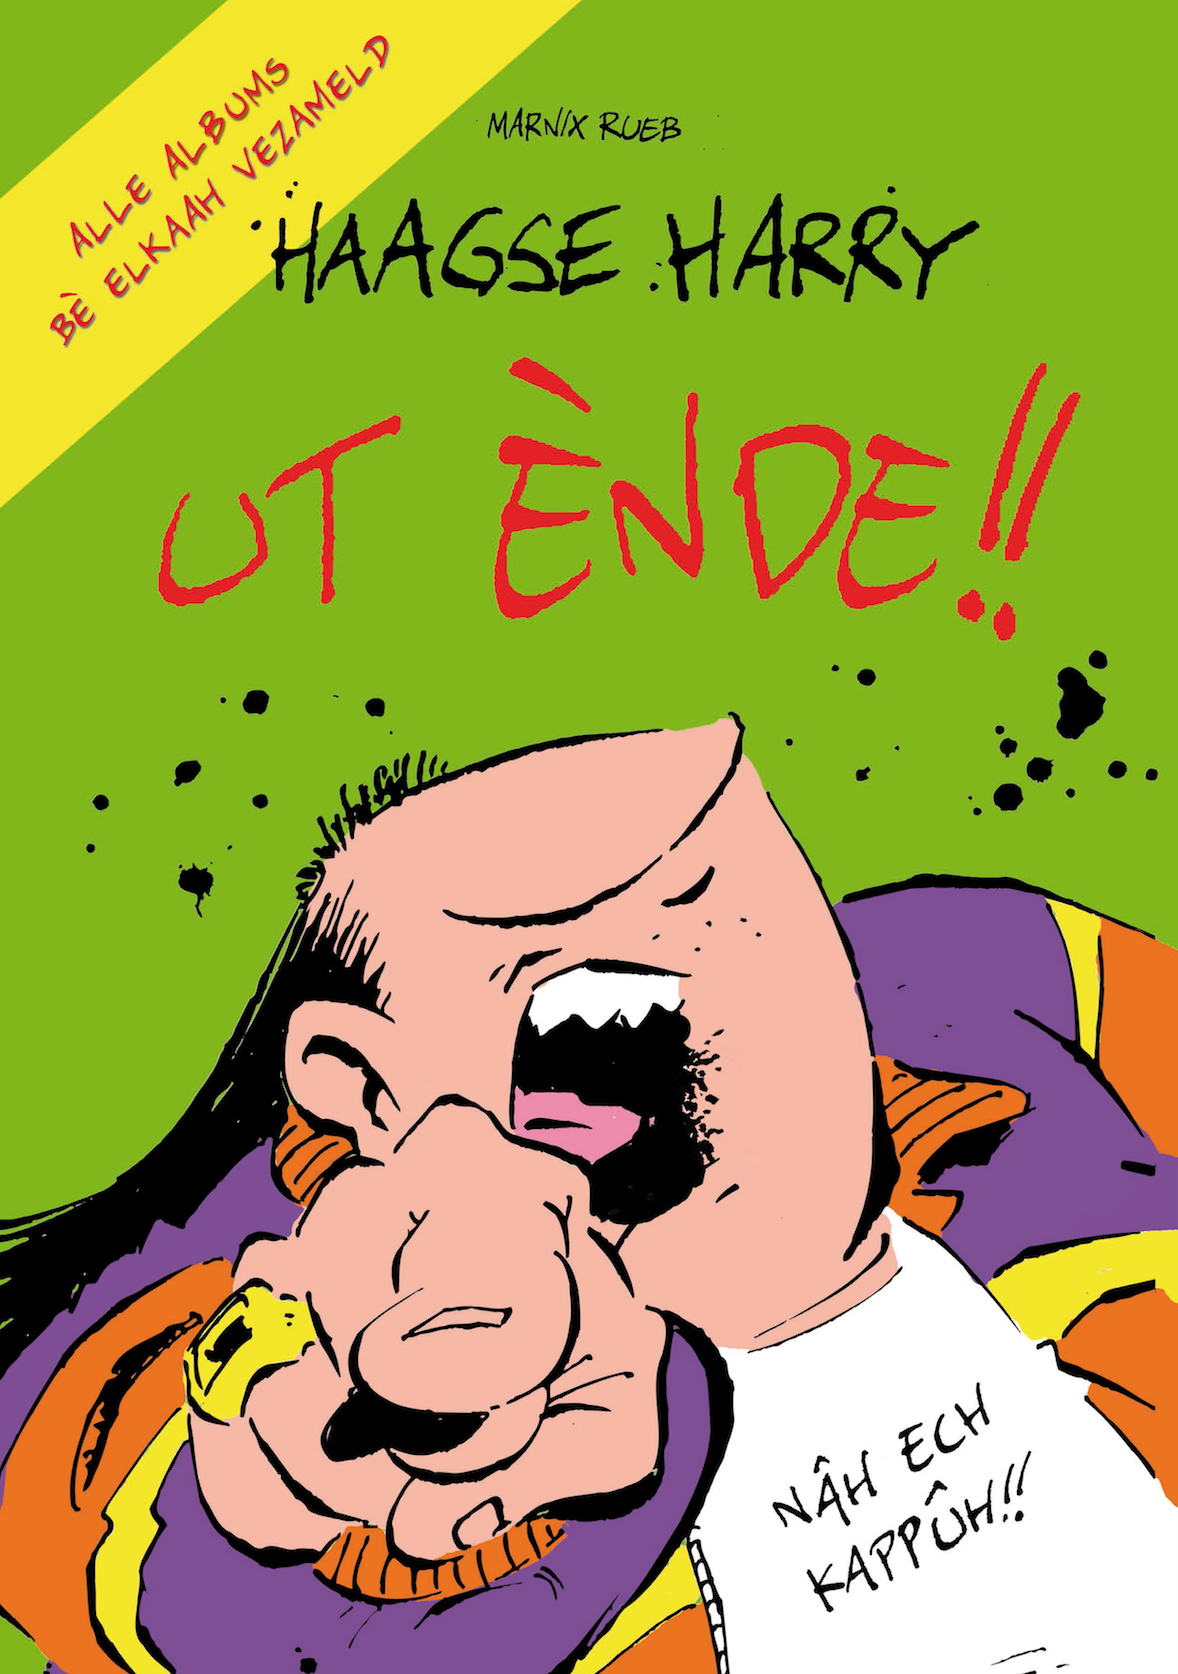 Haagse Harry verzamelbox - Ut Ènde! - 20 euro zomerkorting